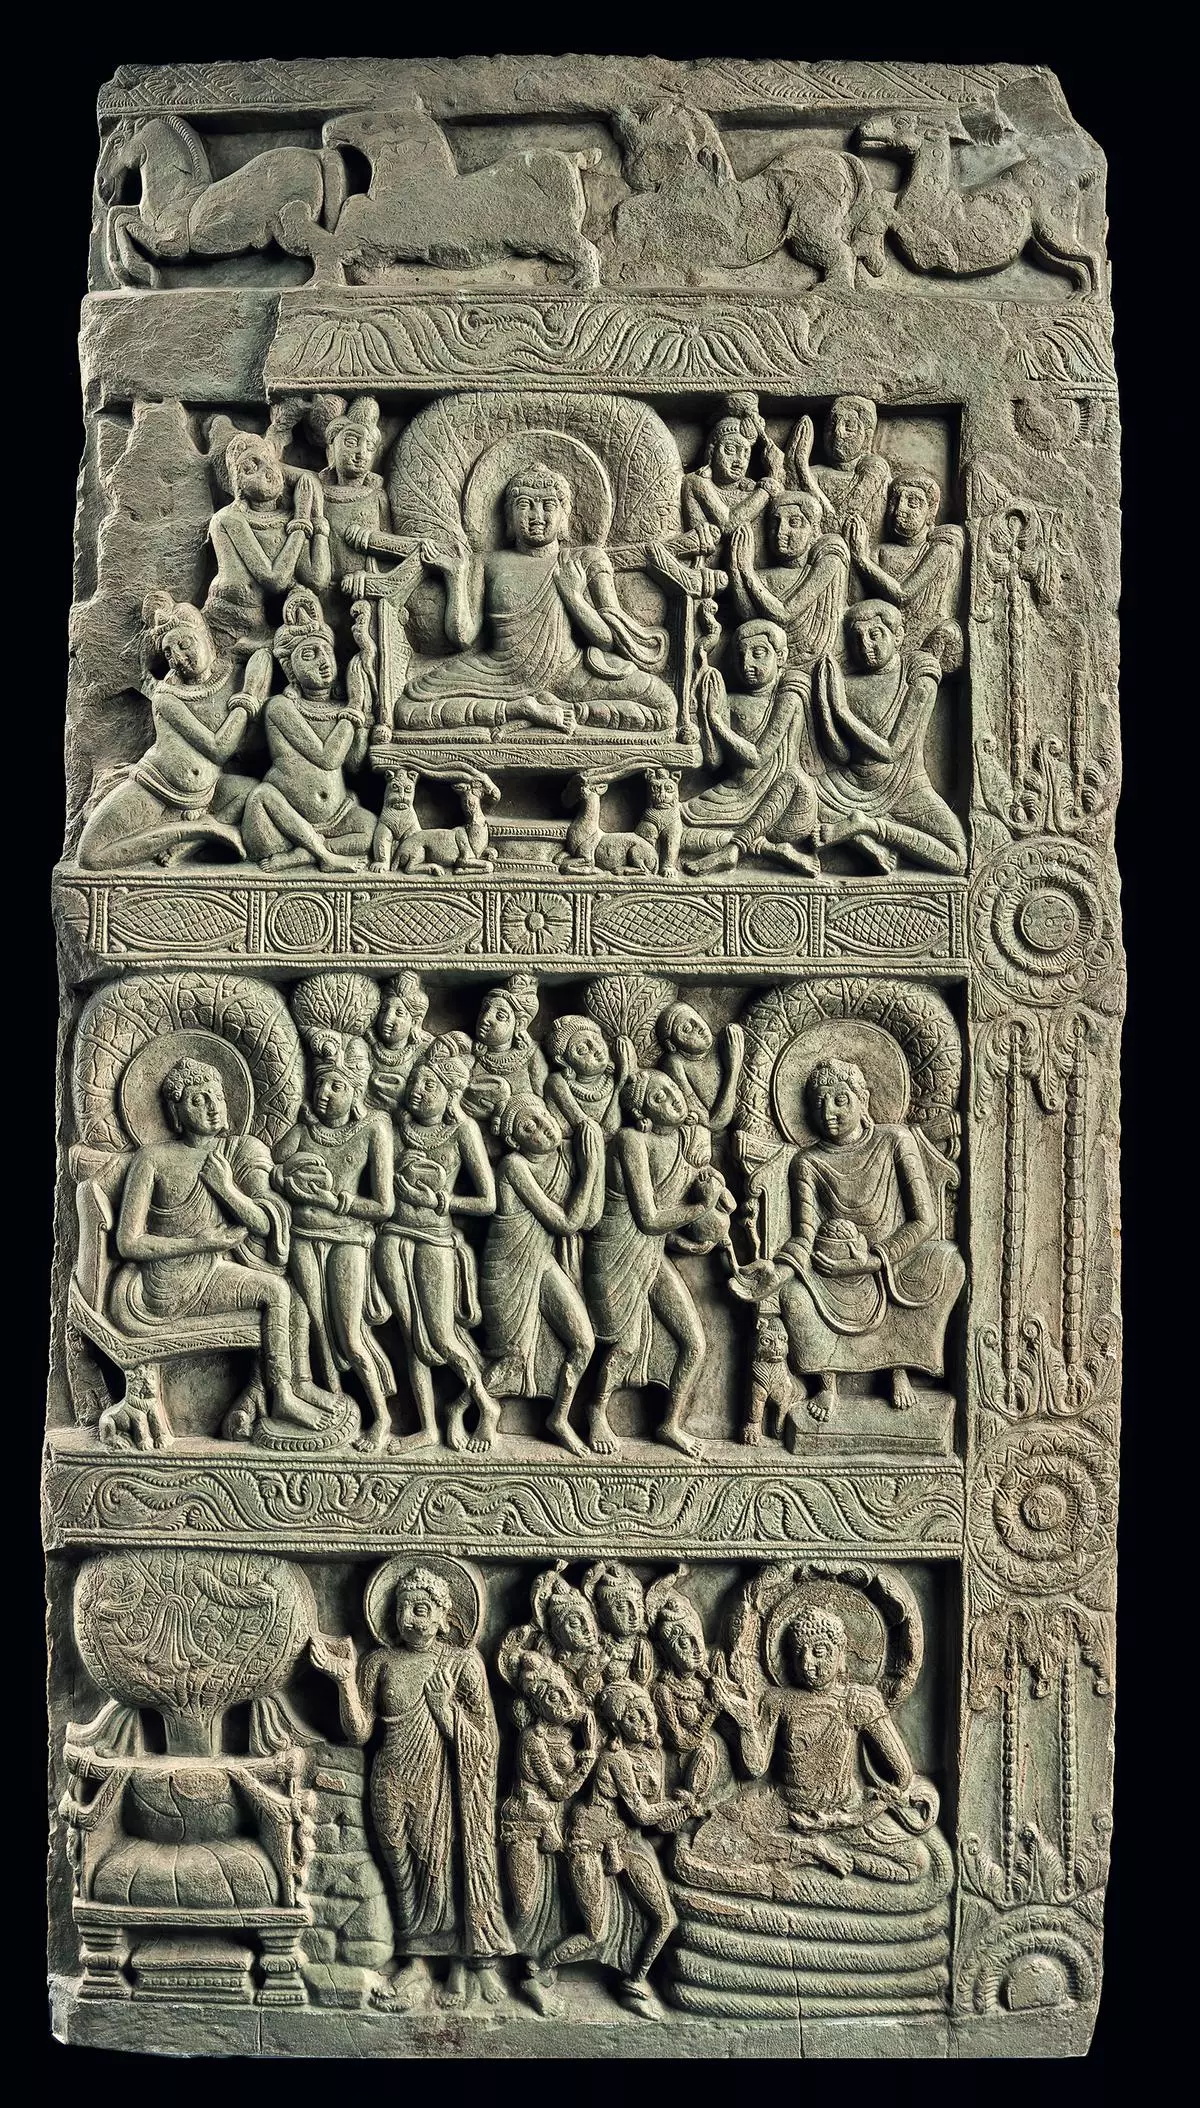 Limestone drum slab depicting five Buddha-life narratives, Nagarjunakonda, Andhra Pradesh, circa 3rd century CE. Archaeological Museum ASI, Nagarjunakonda.             